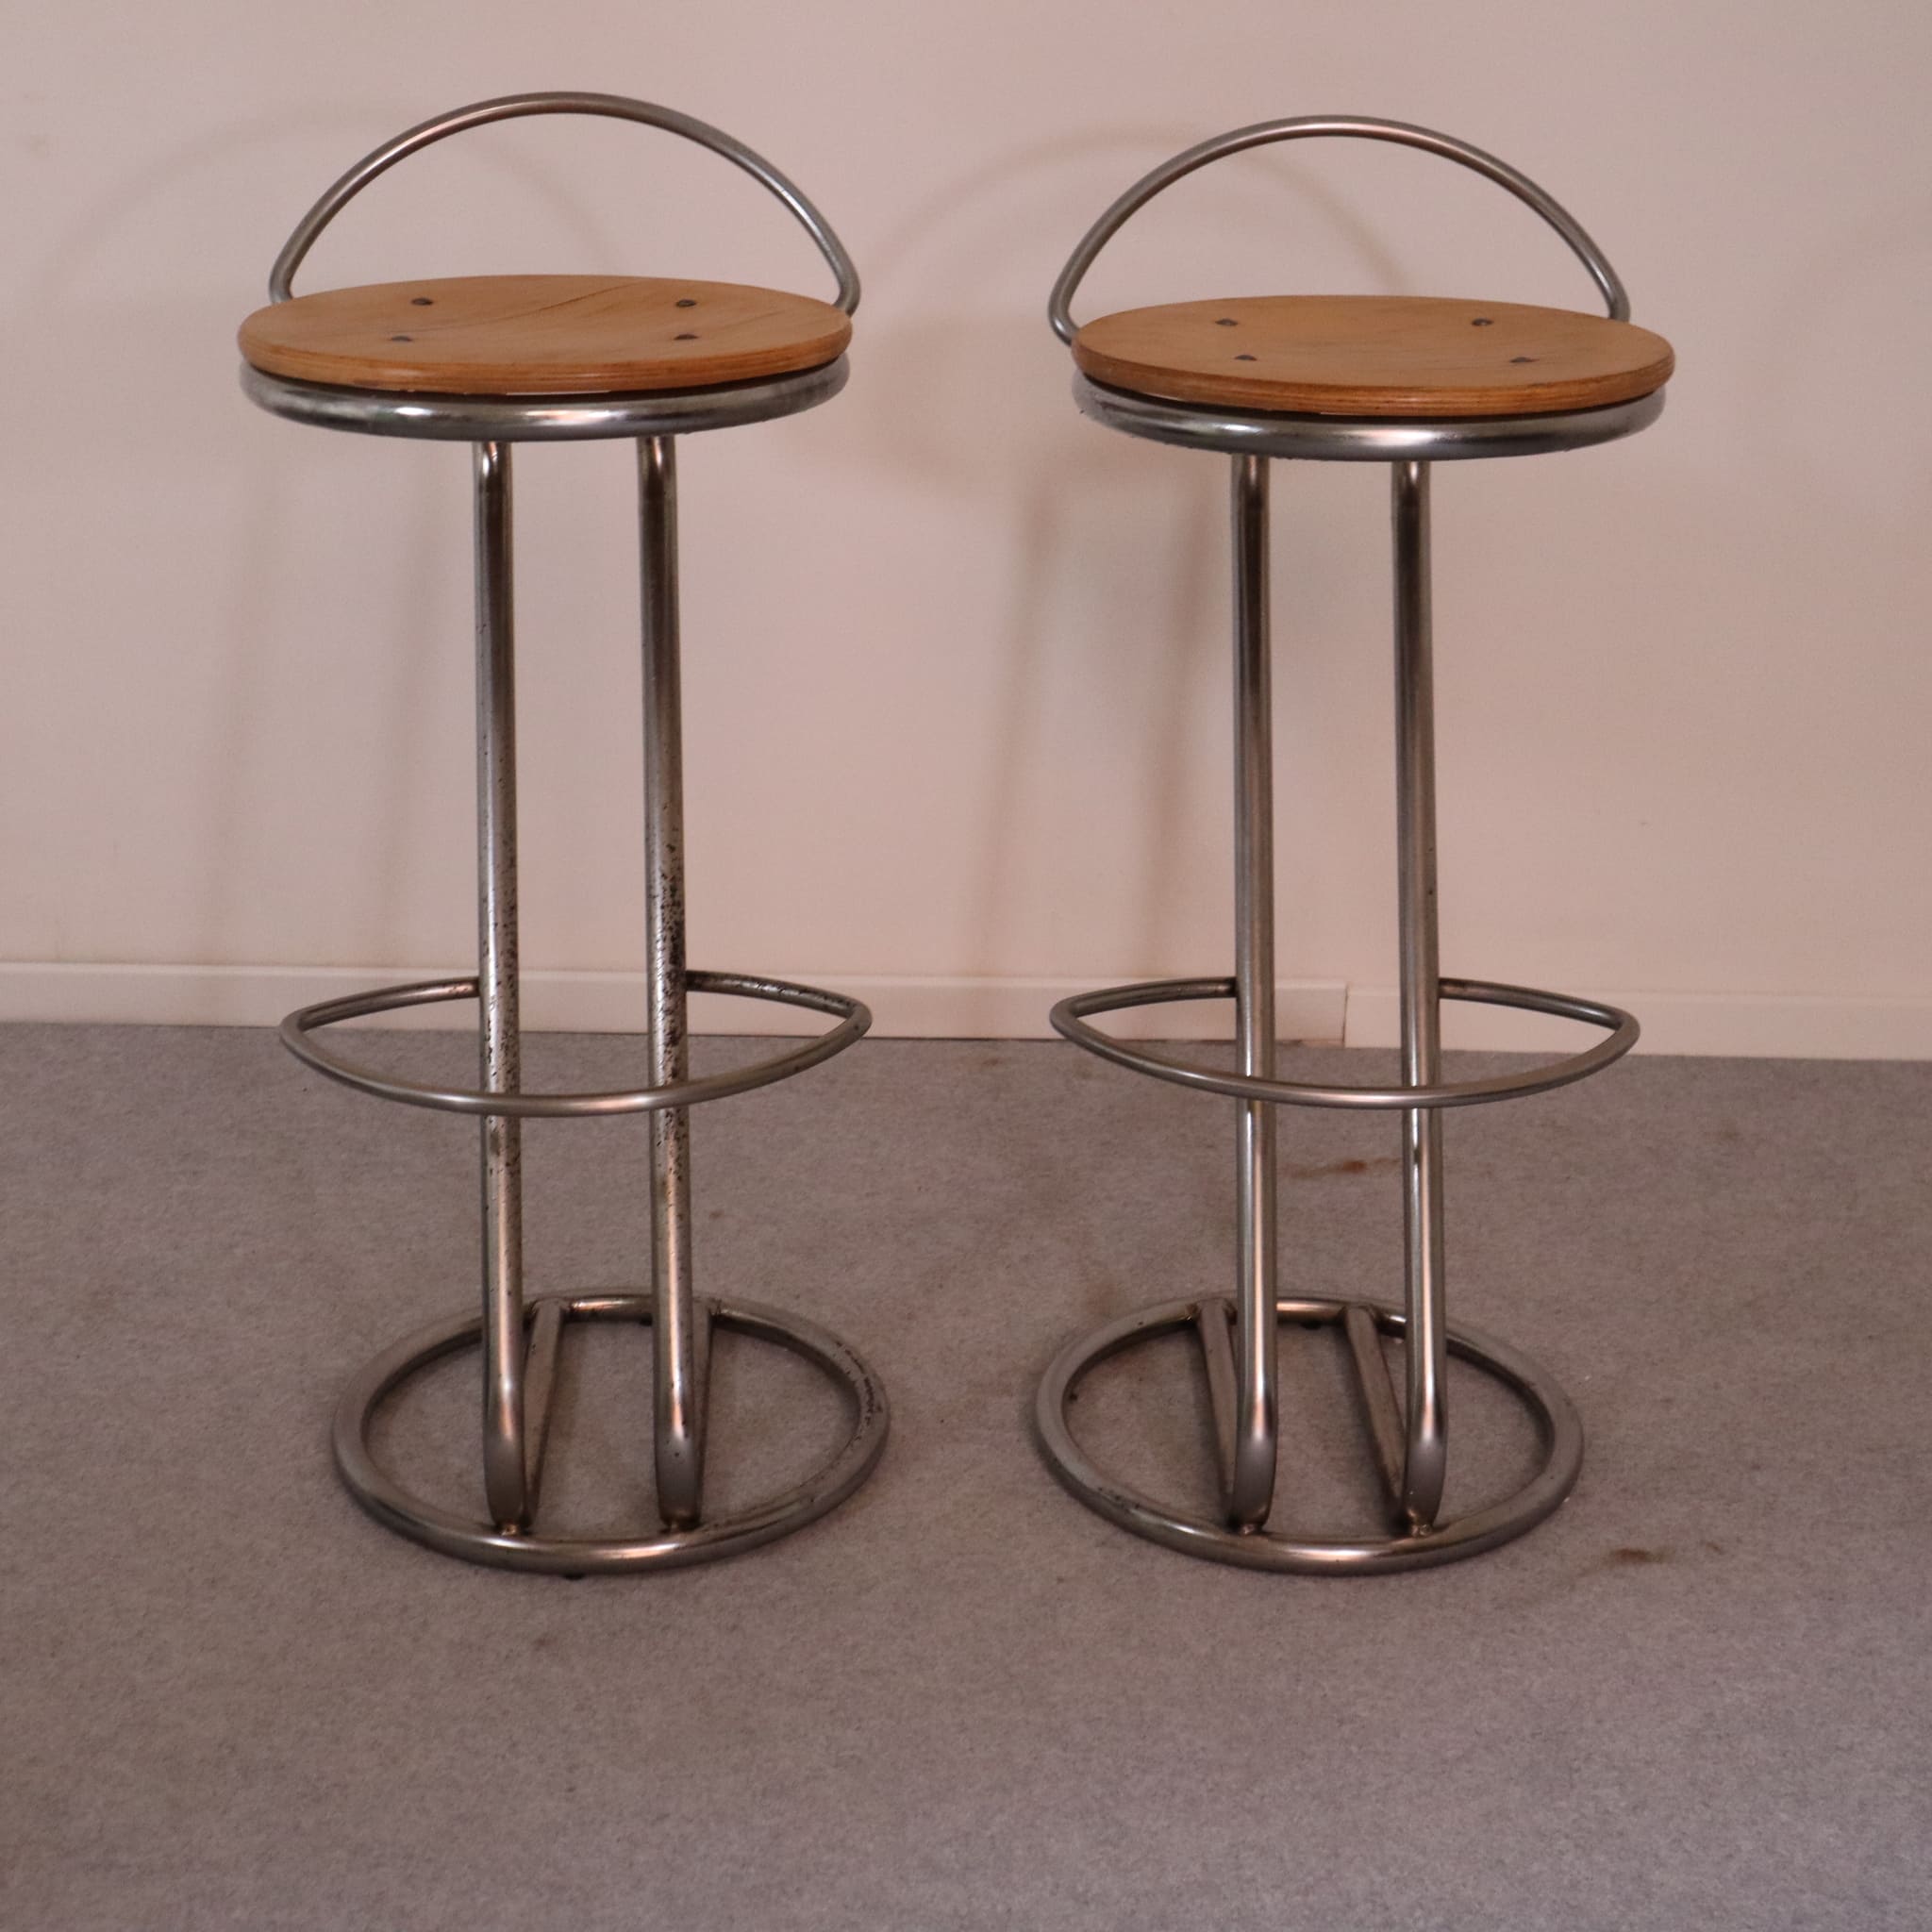 visionidepoca-visioni-depoca-metal-wood-industrial-vintage-design-furniture-modern-antiques-made-italy-stools-stool-1